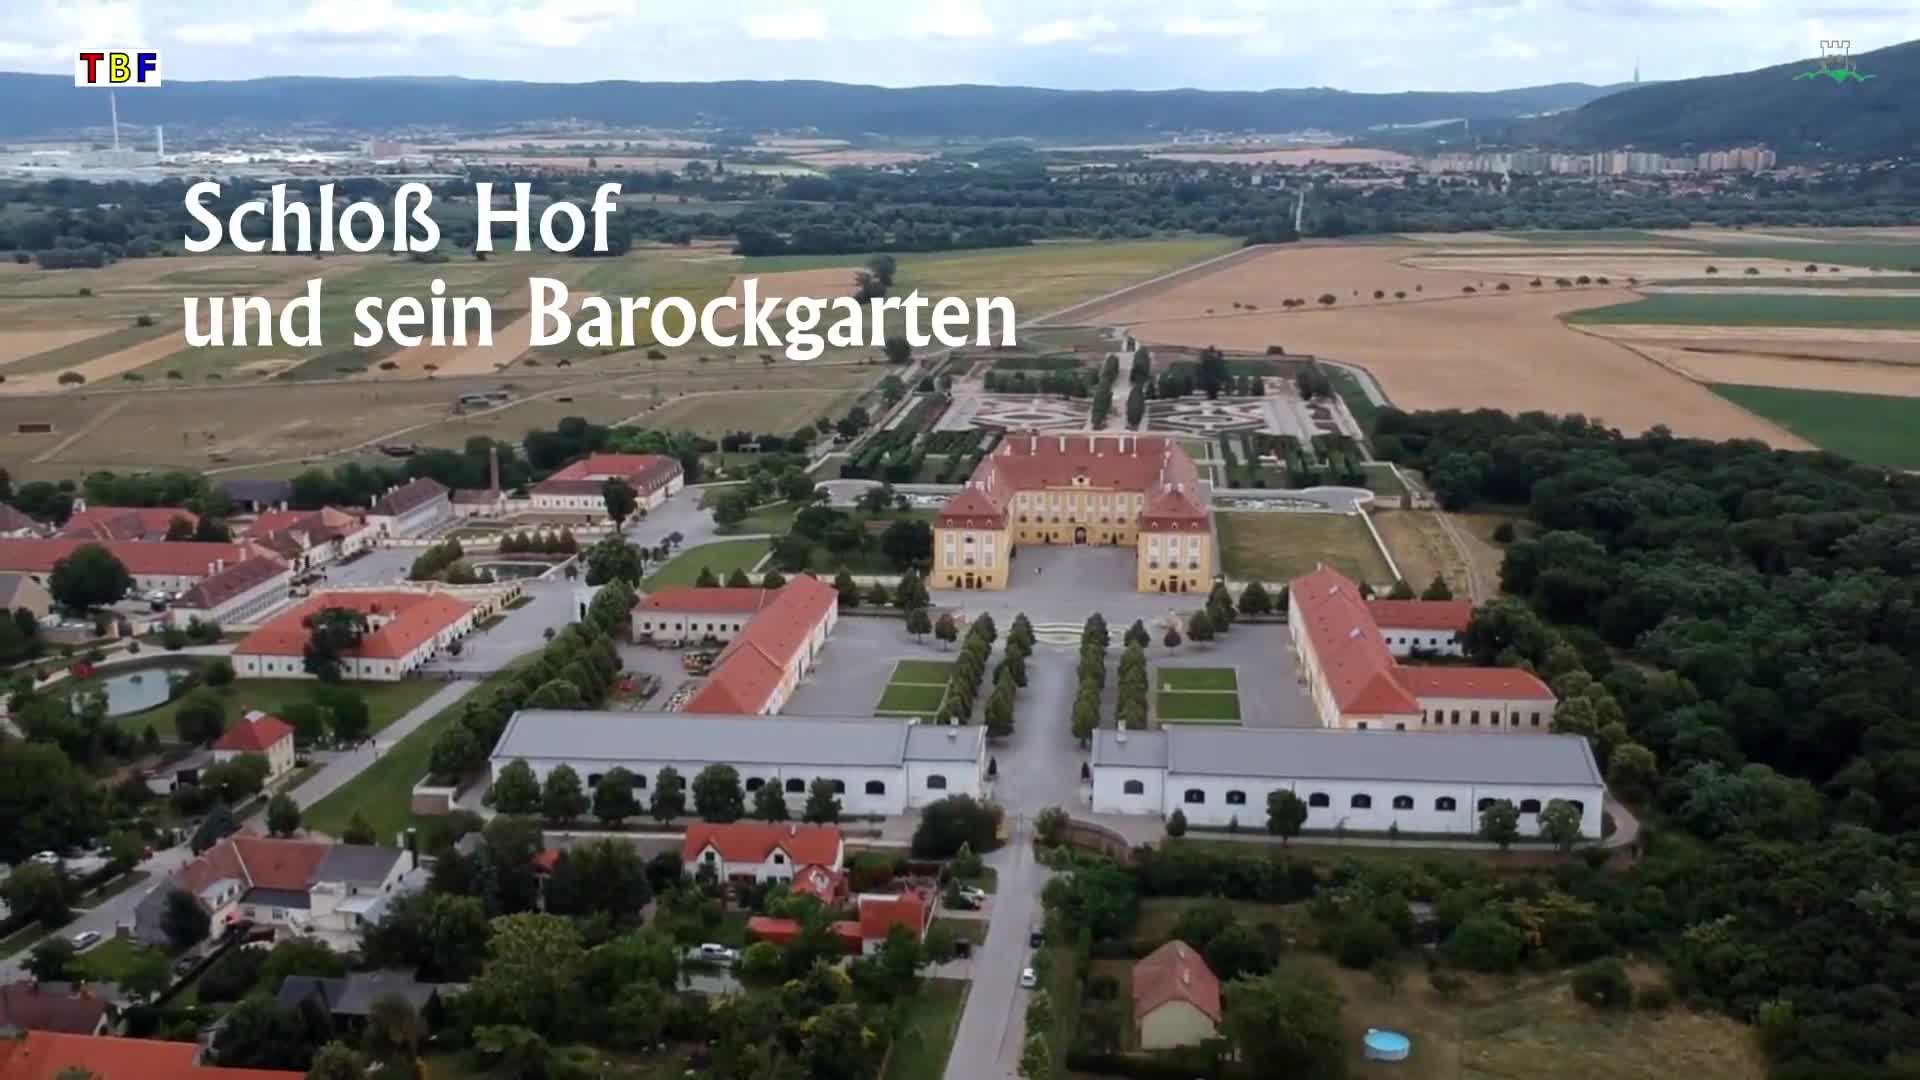 Schloss Hof und sein Barockgarten